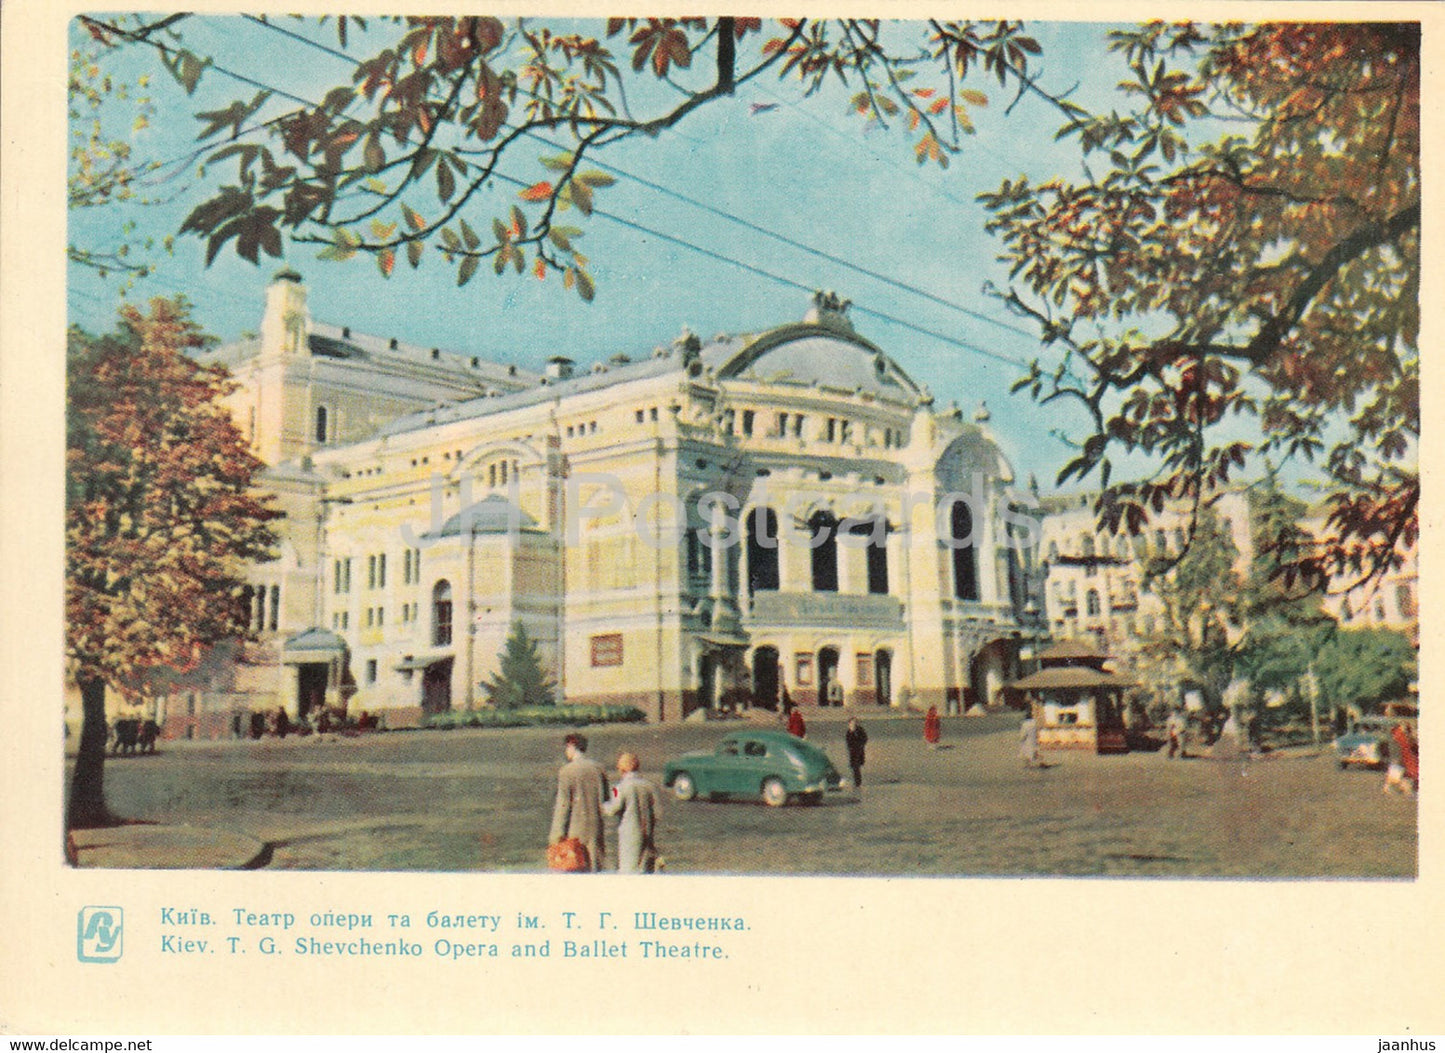 Kyiv - Kiev - Shevchenko Opera and Ballet Theatre - car Pobeda - 1964 - Ukraine USSR - unused - JH Postcards